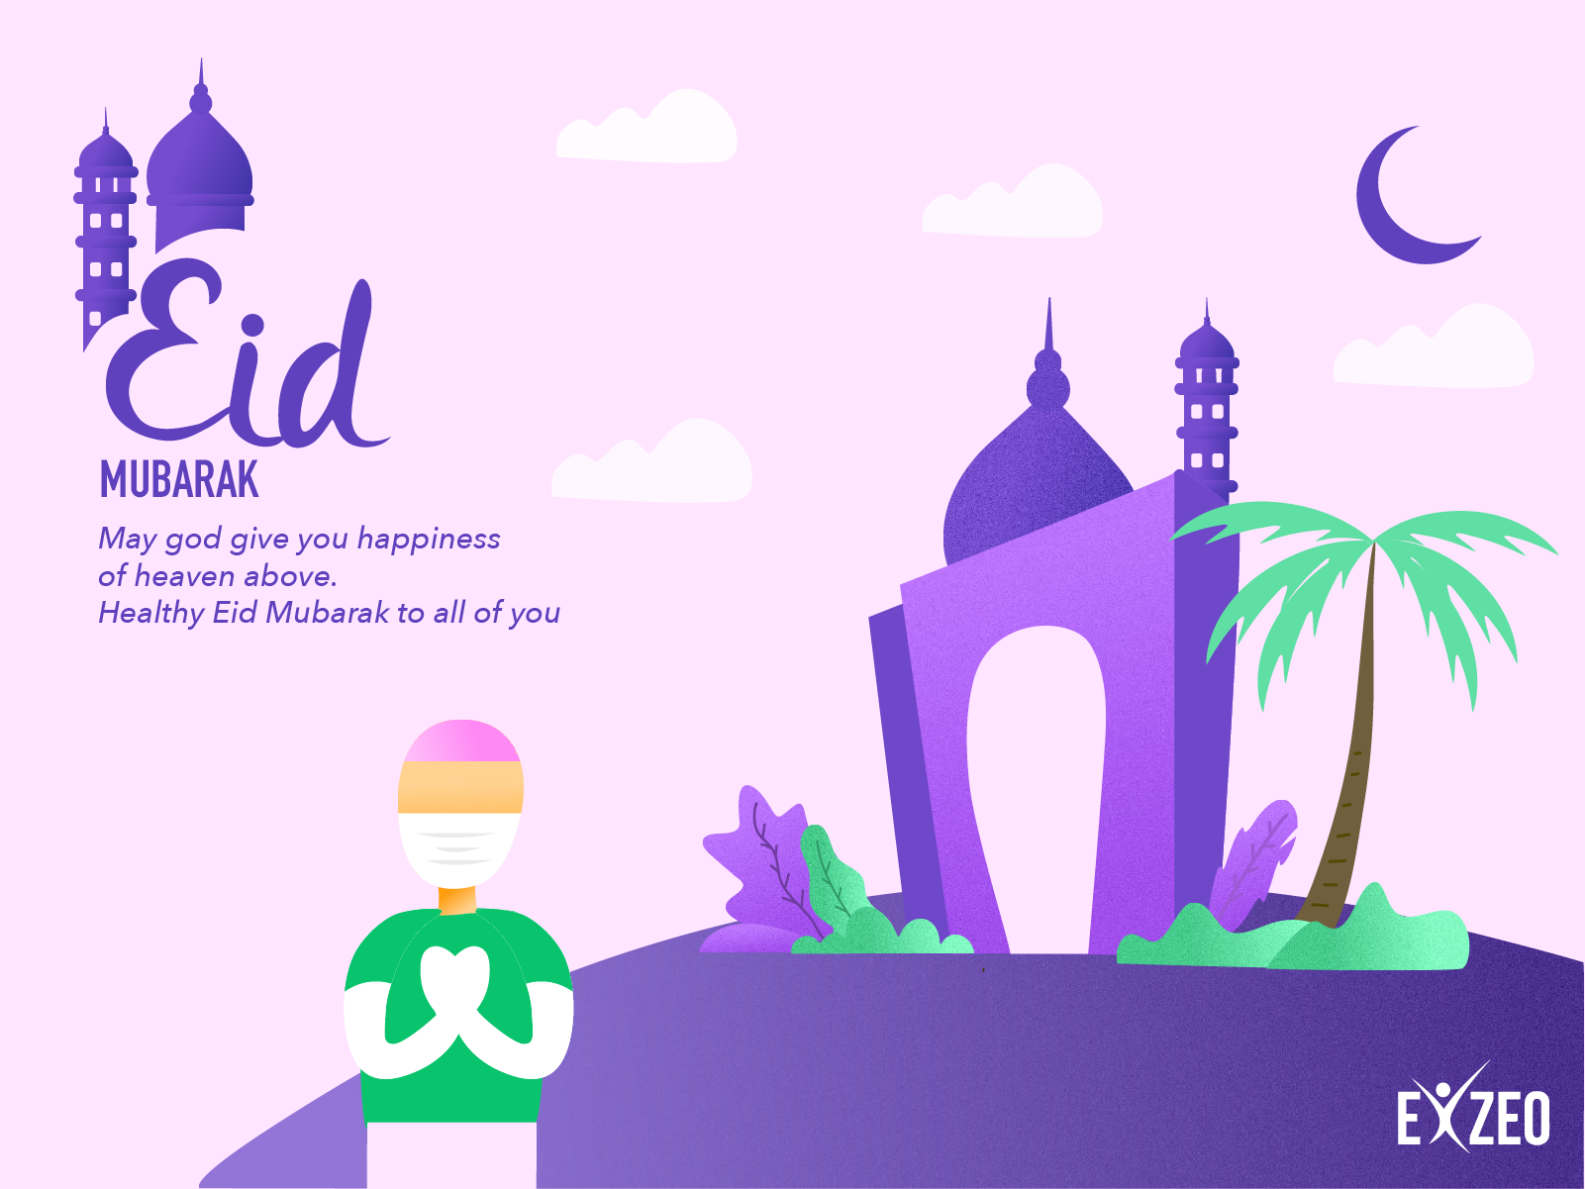 Eid festival by Salman on Dribbble